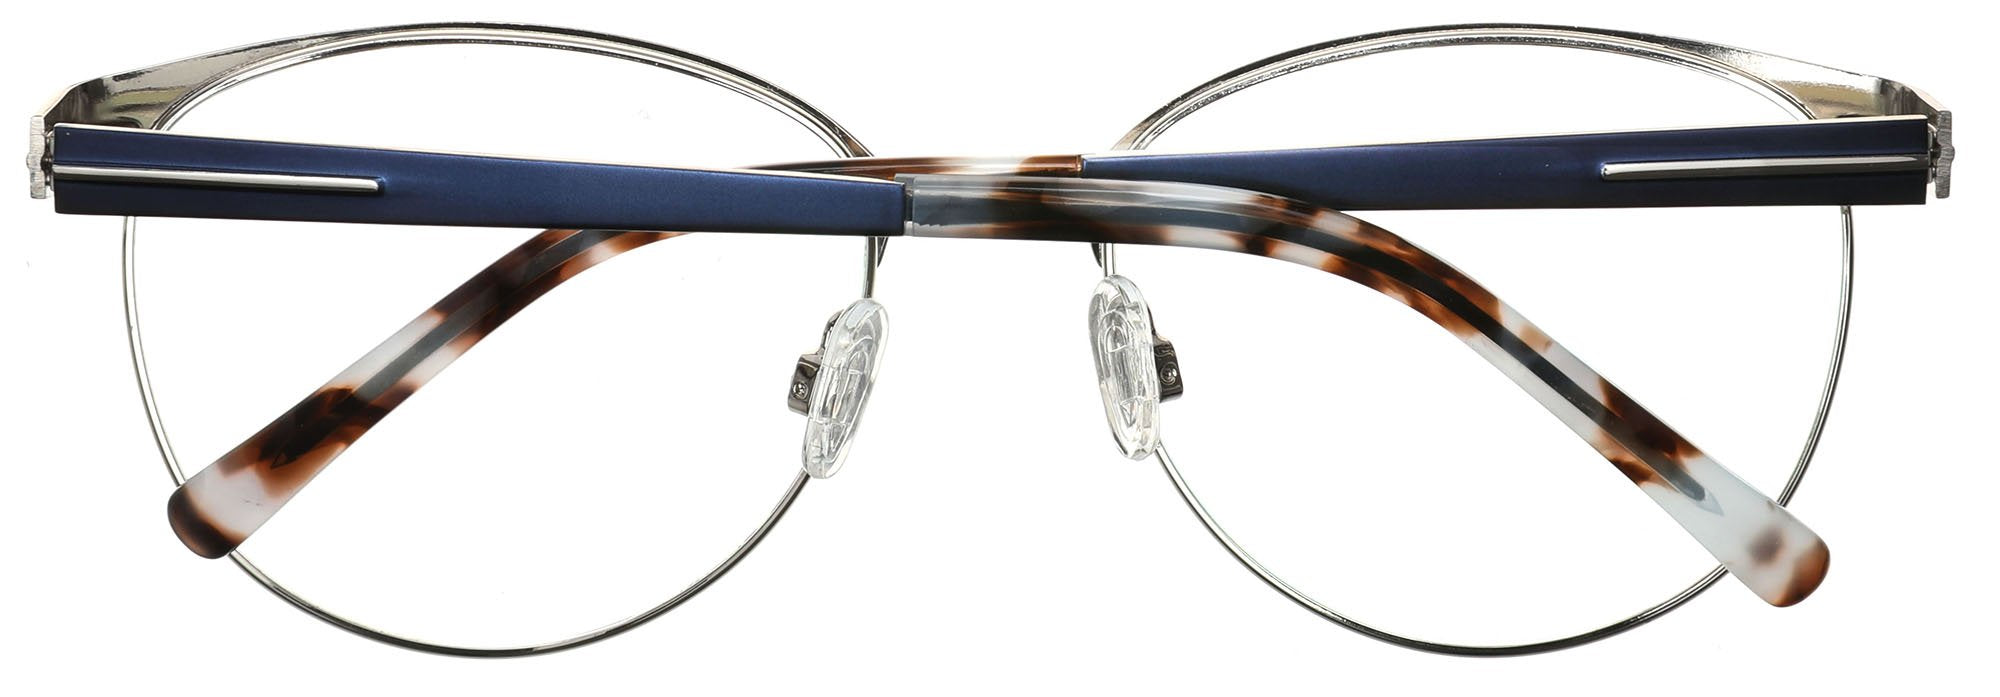 Tango Optics Oval Metal Eyeglasses Frame Luxe Rx Stainless Steel Elisa Samba Shades